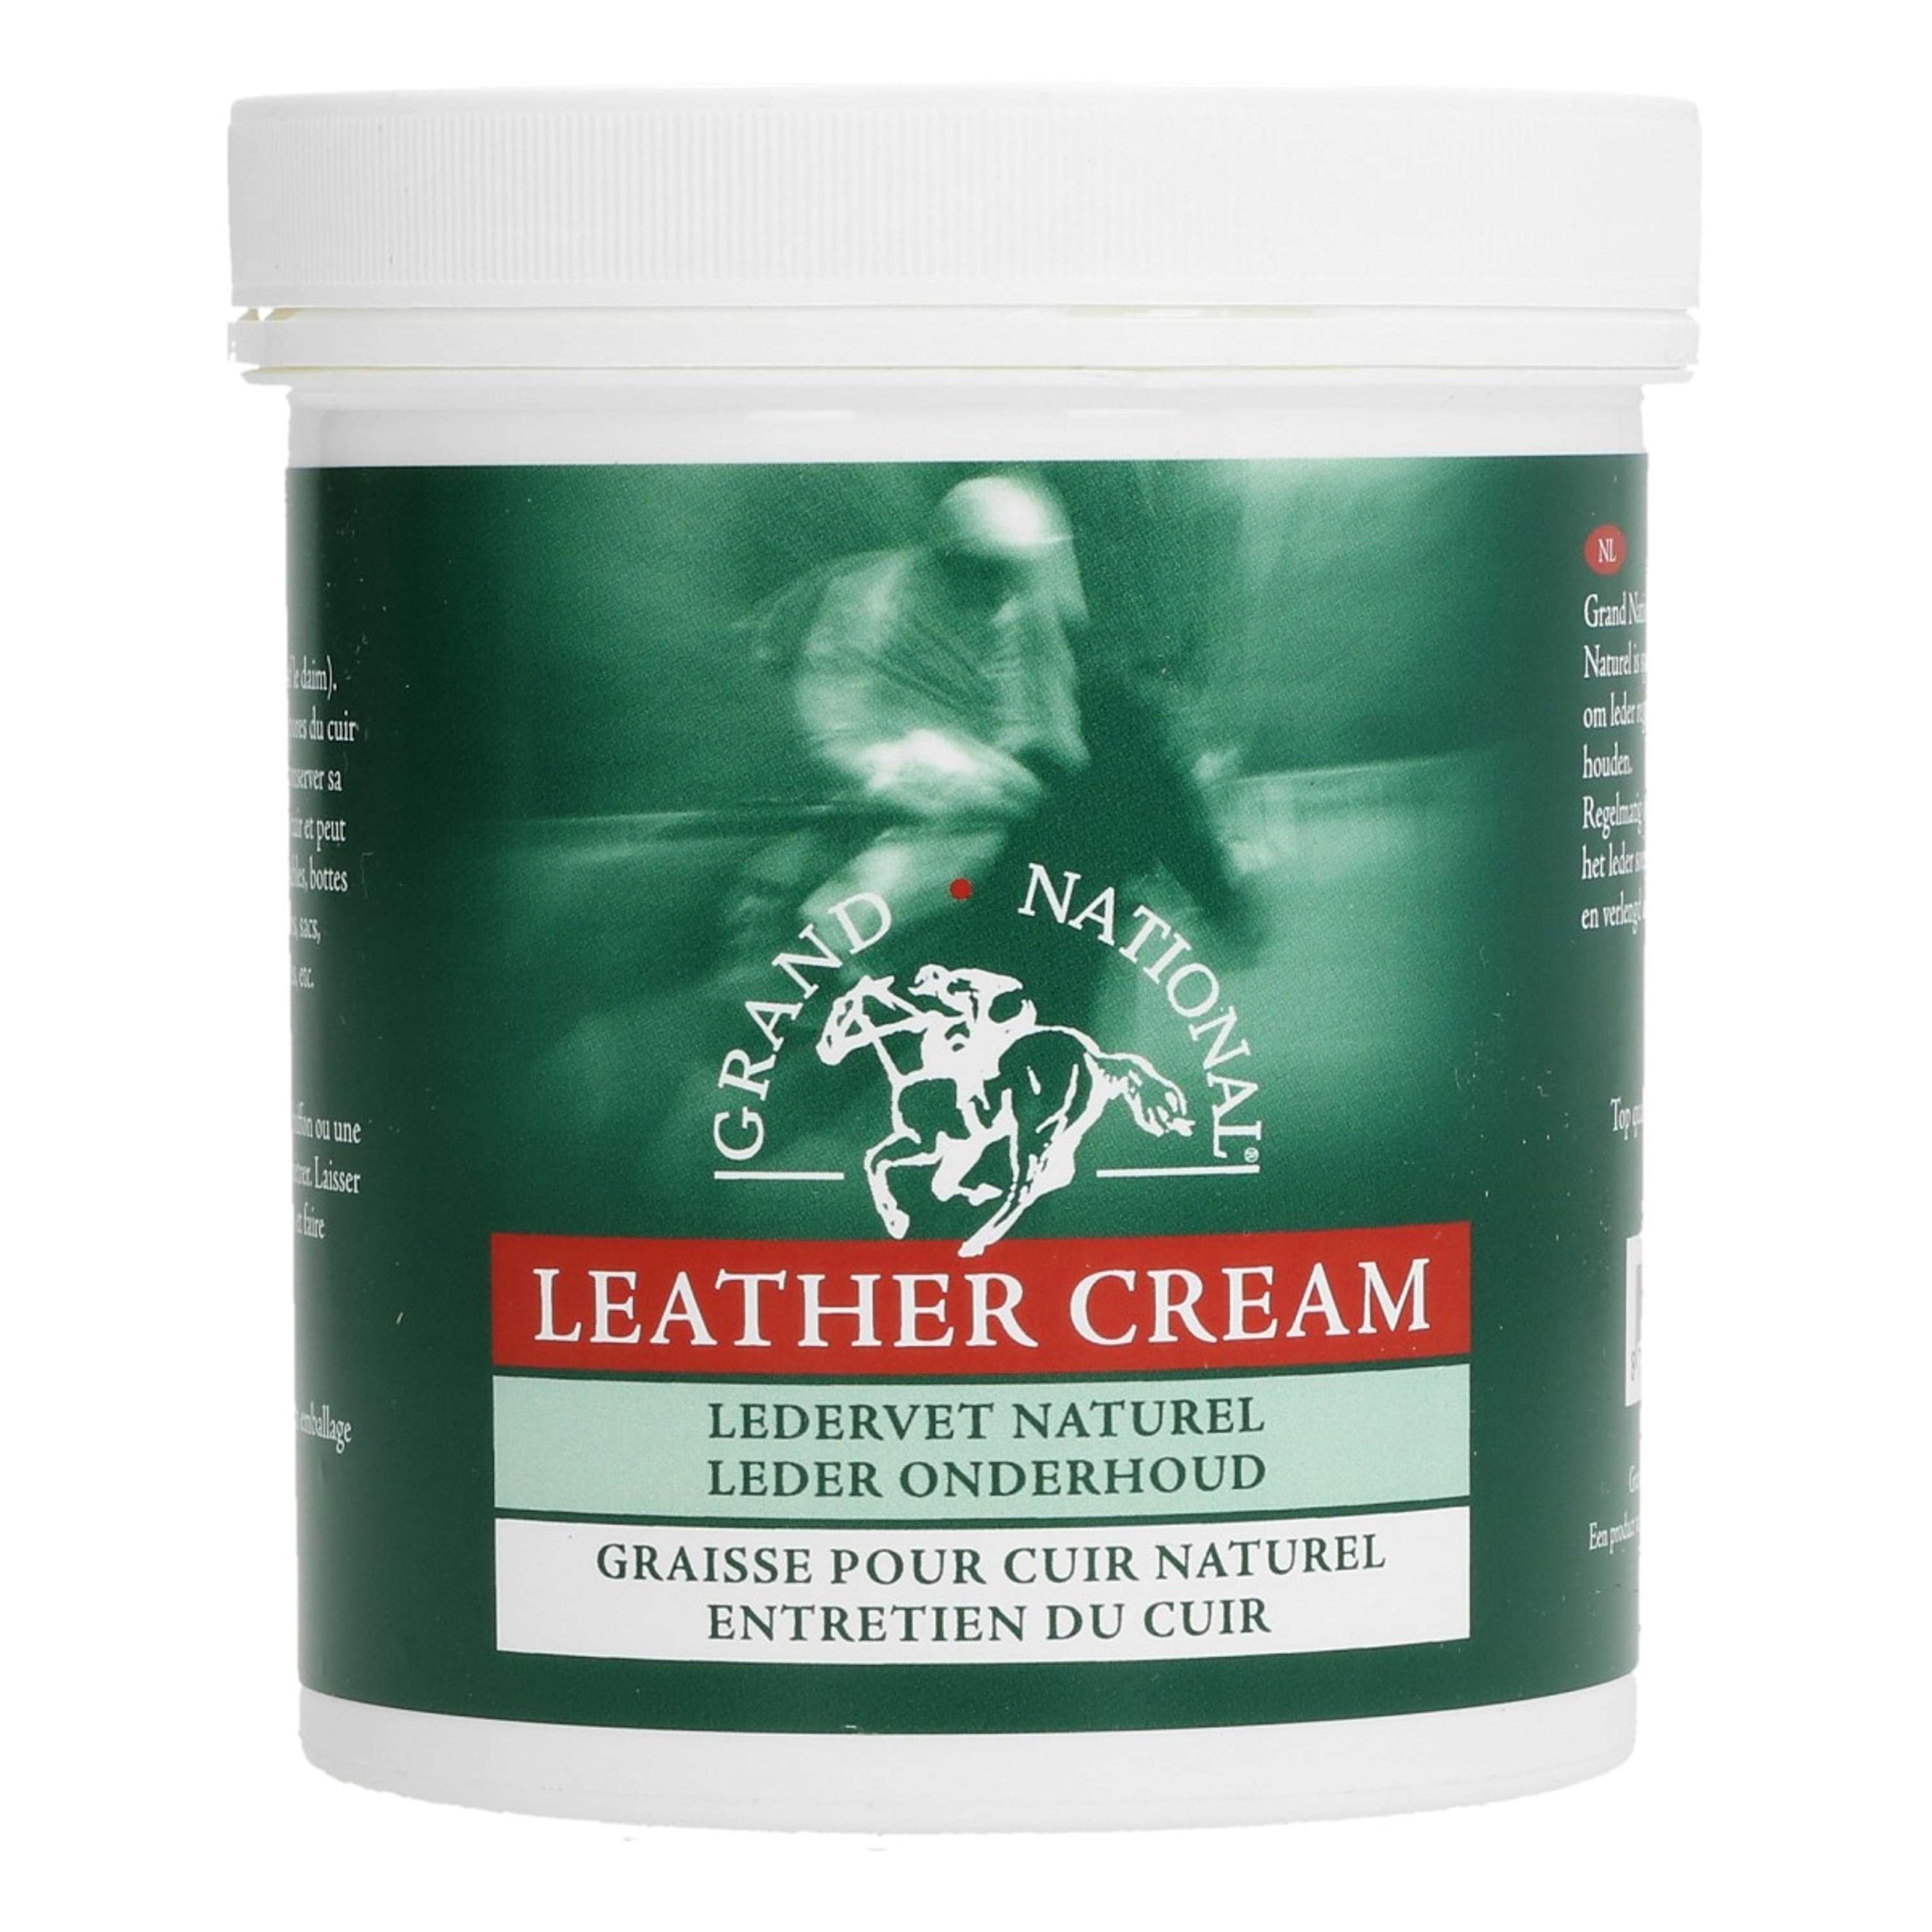 Grand National Graisse pour Cuir Leather Cream